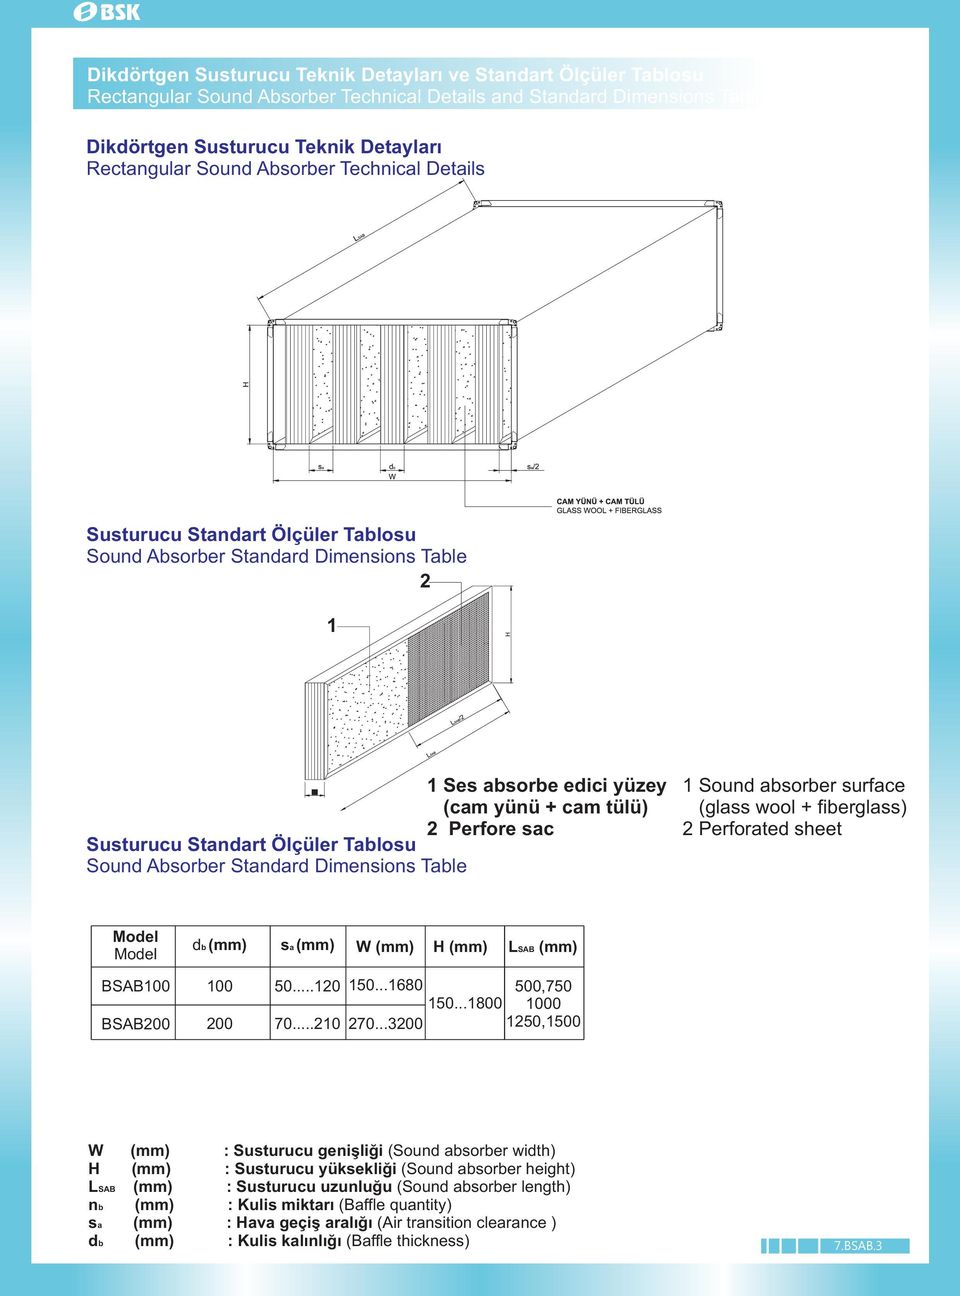 Sound Absorber Standard Dimensions Table Sound absorber surface (glass wool + fiberglass) Perforated sheet Model Model db (mm) sa (mm) W (mm) H (mm) LSAB (mm) BSAB00 00 50...0 BSAB00 00 70...0 50...680 500,750 50.